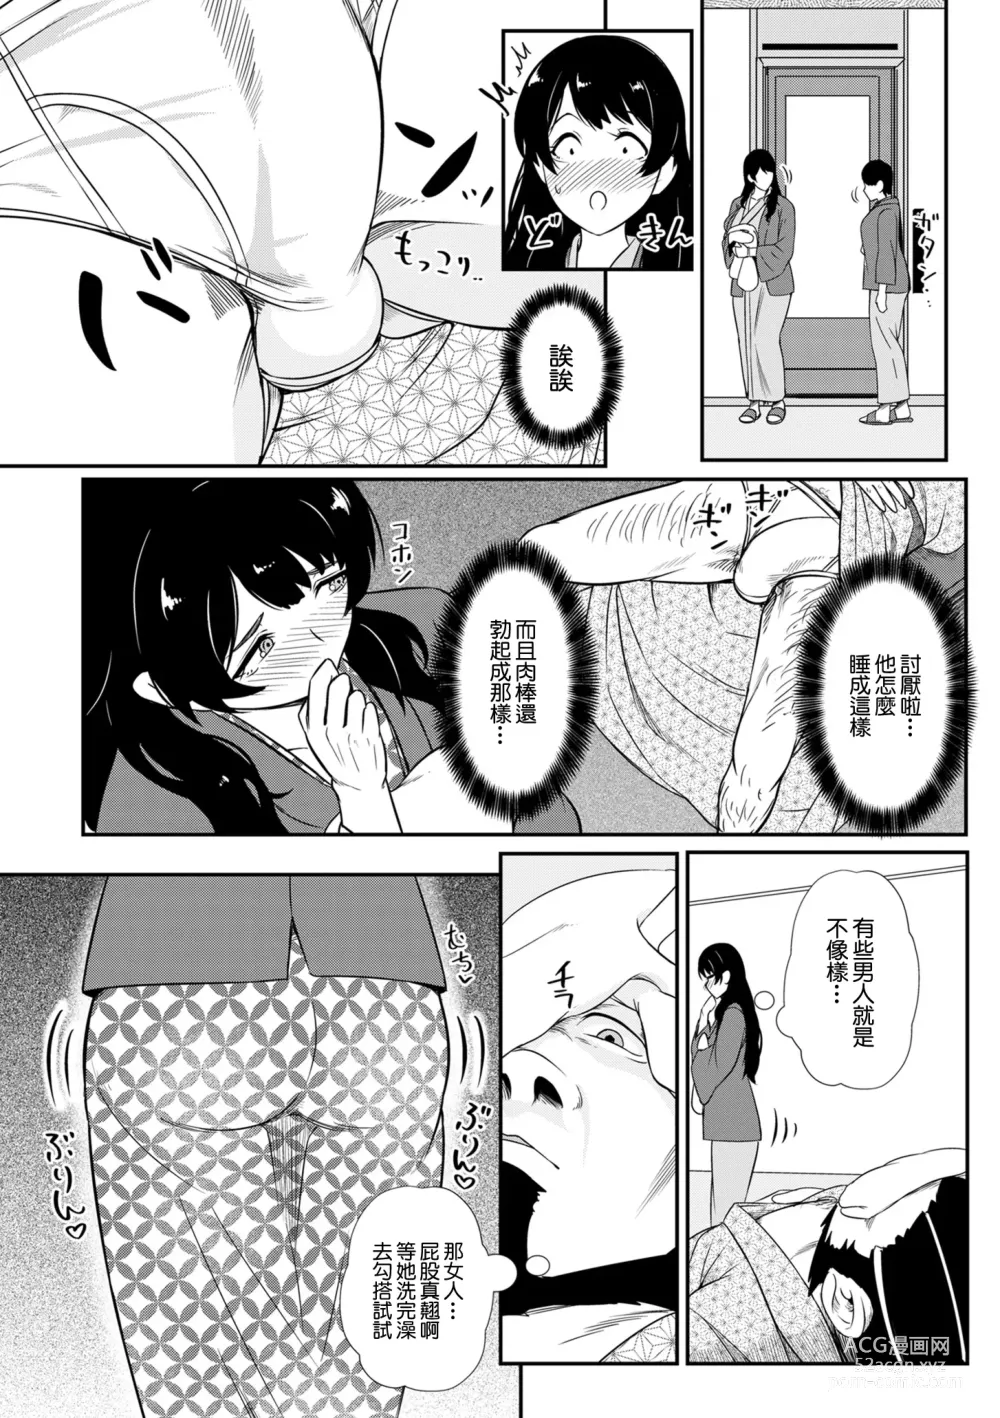 Page 2 of manga Haha wa Tabi no Owari ni...